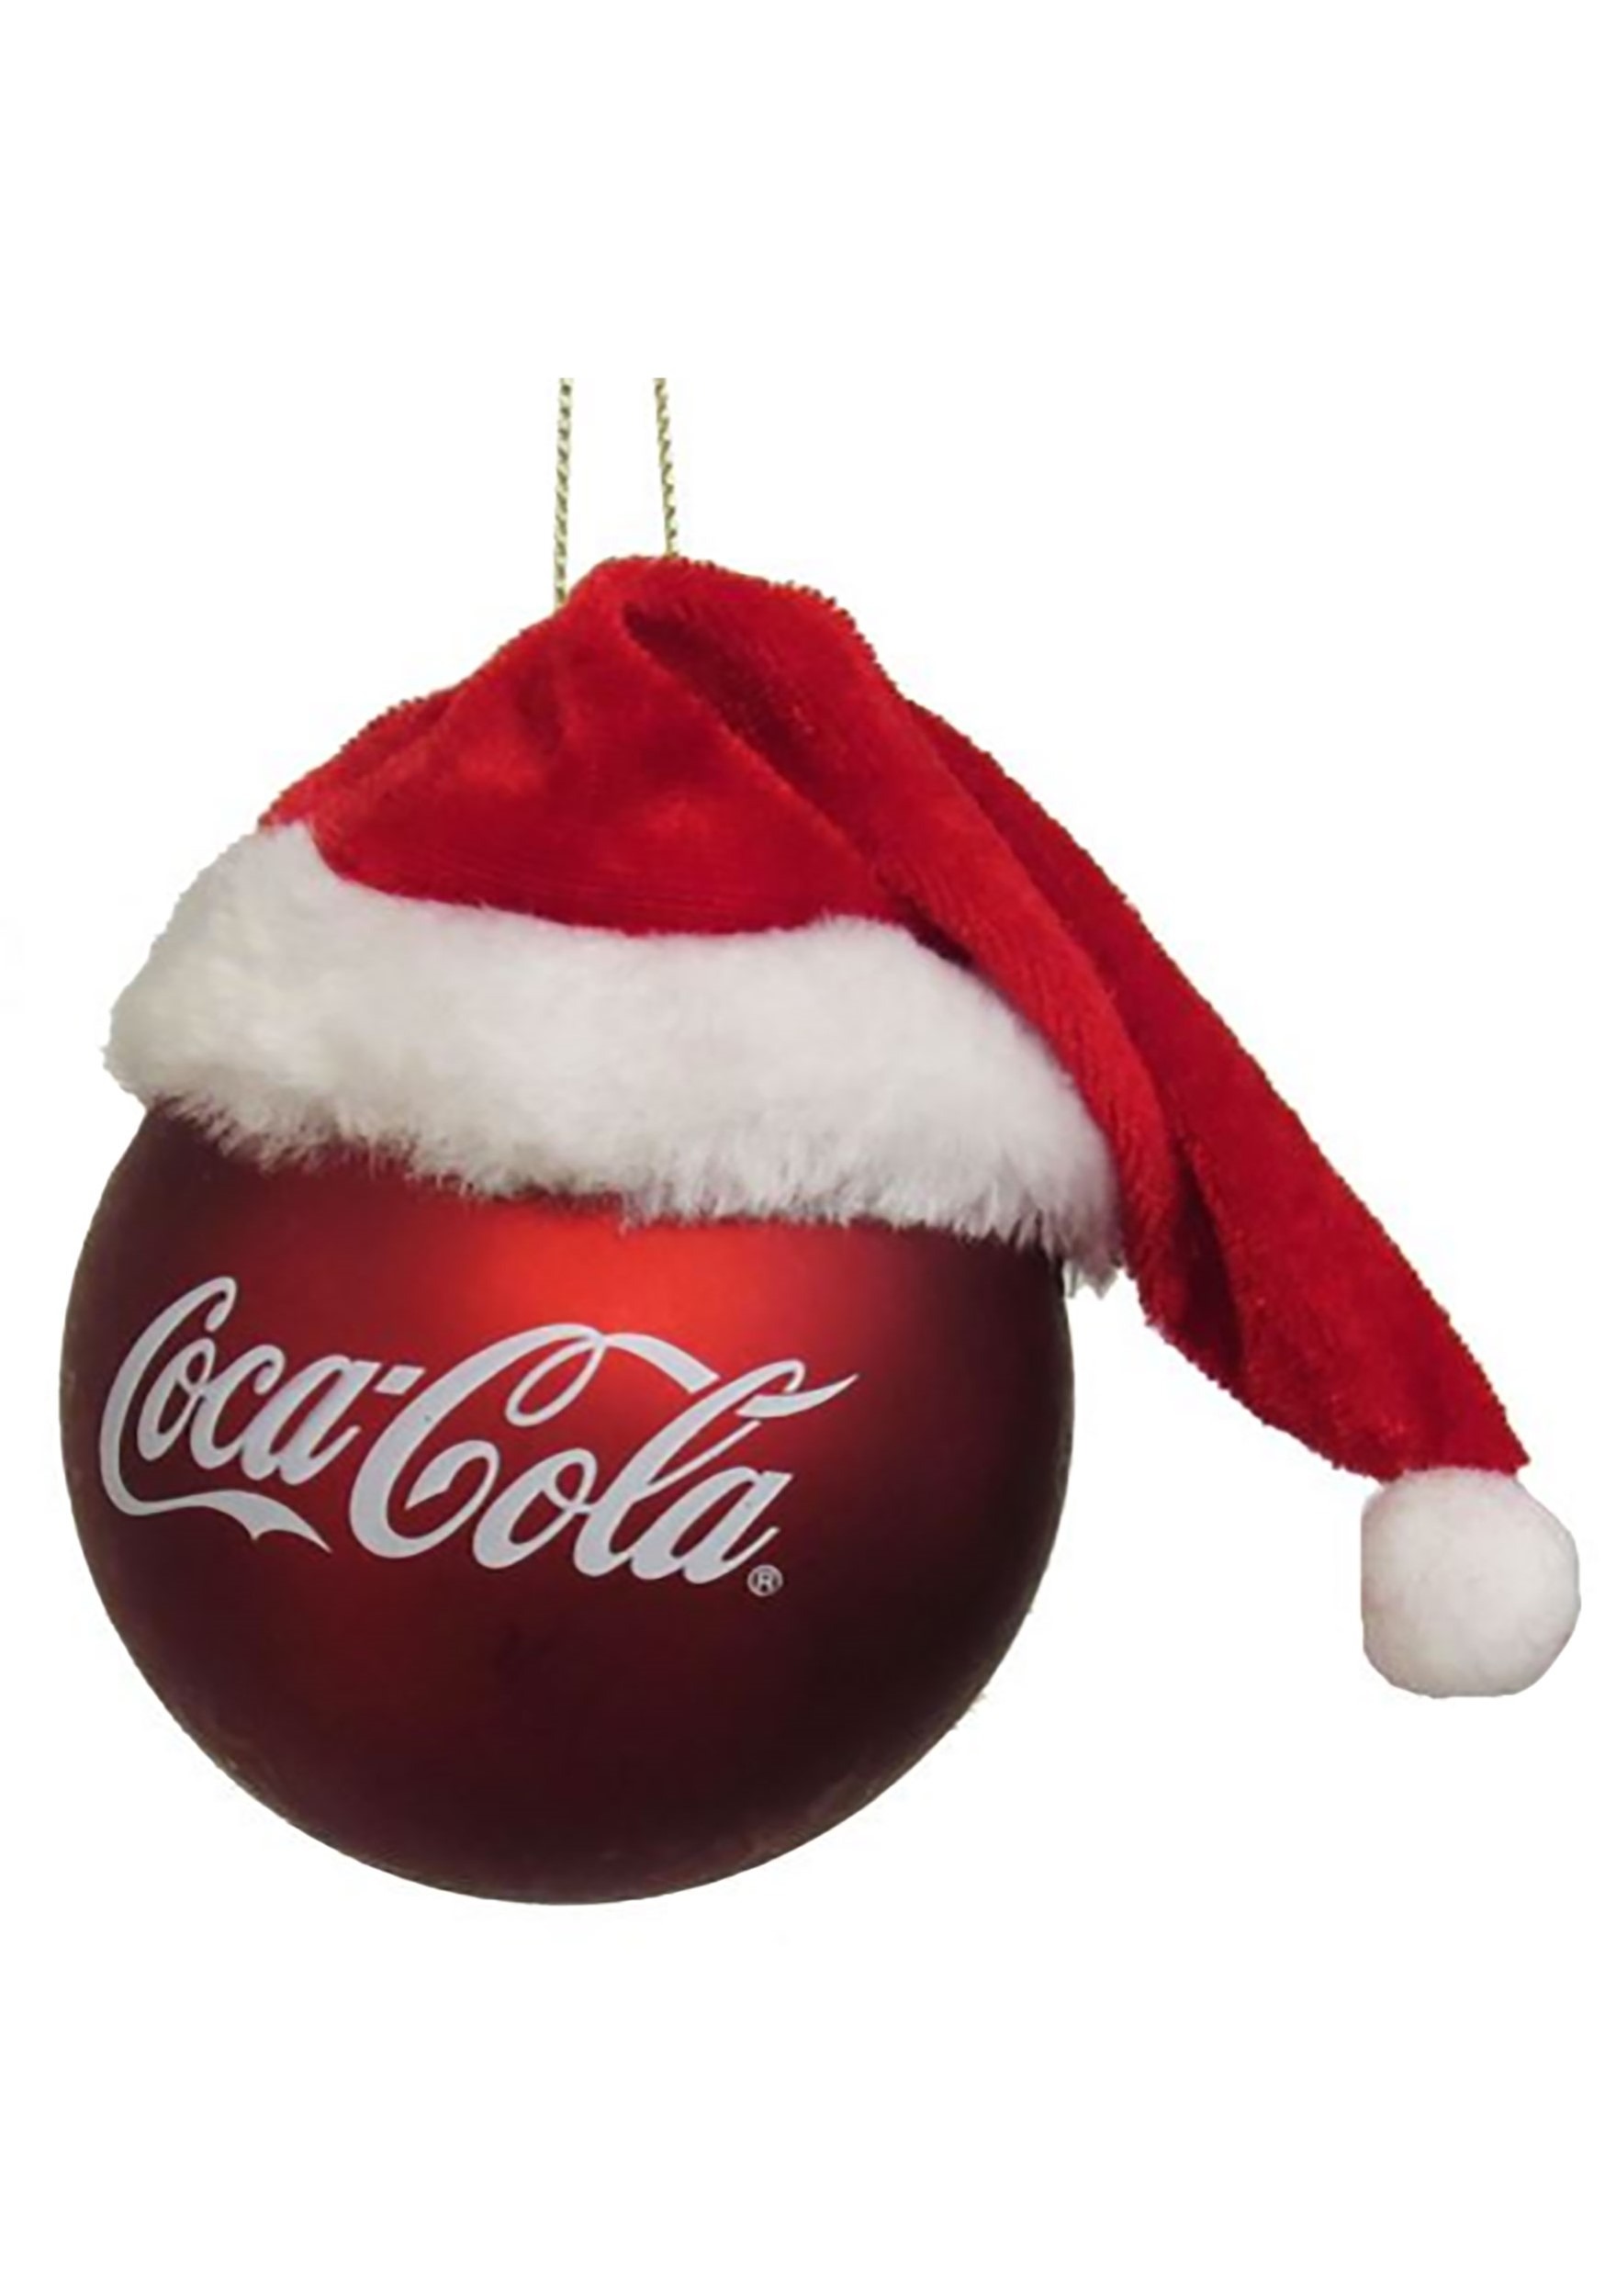 Coca-Cola Ball Ornament with Santa Hat